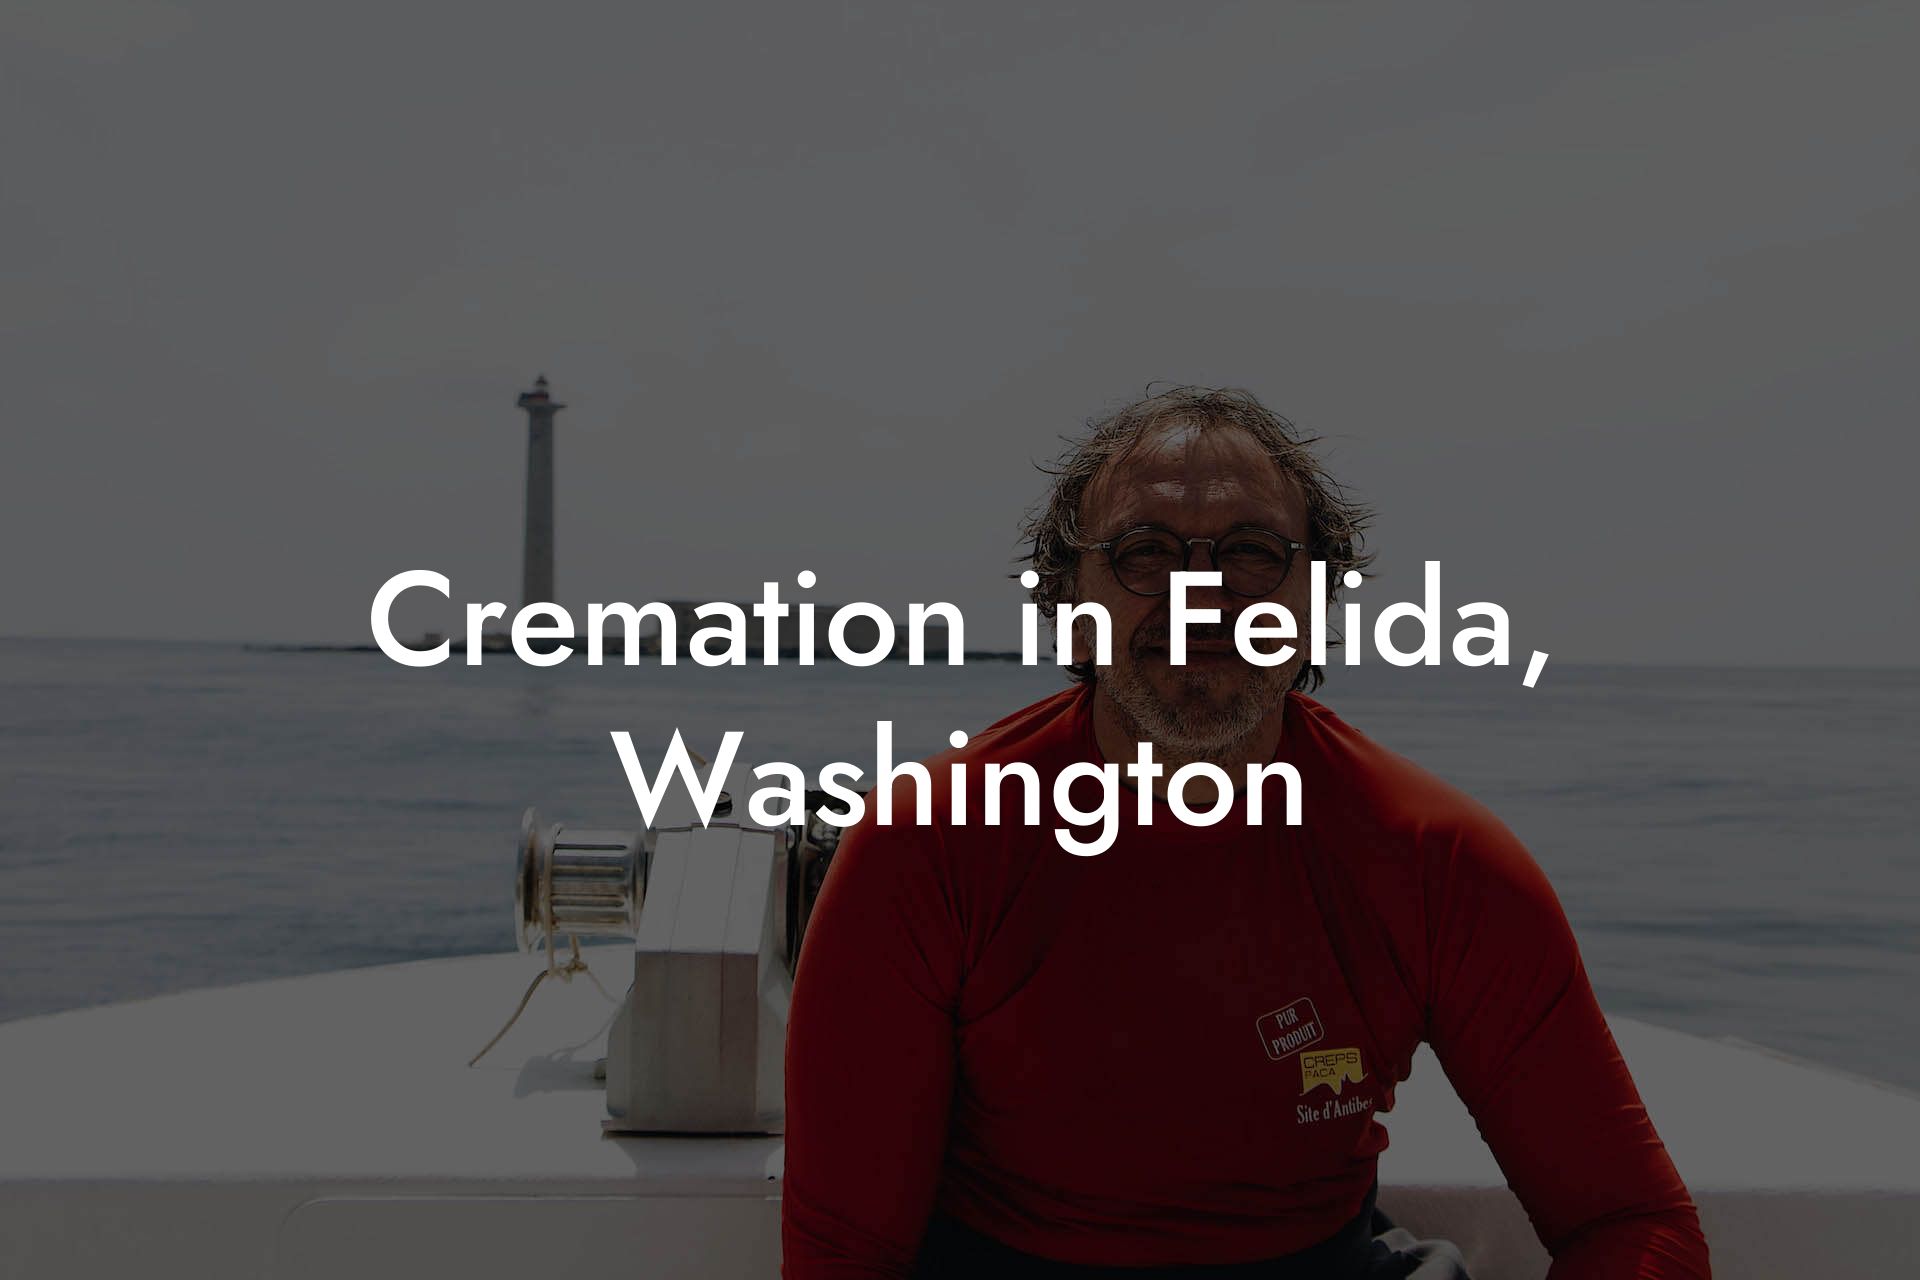 Cremation in Felida, Washington